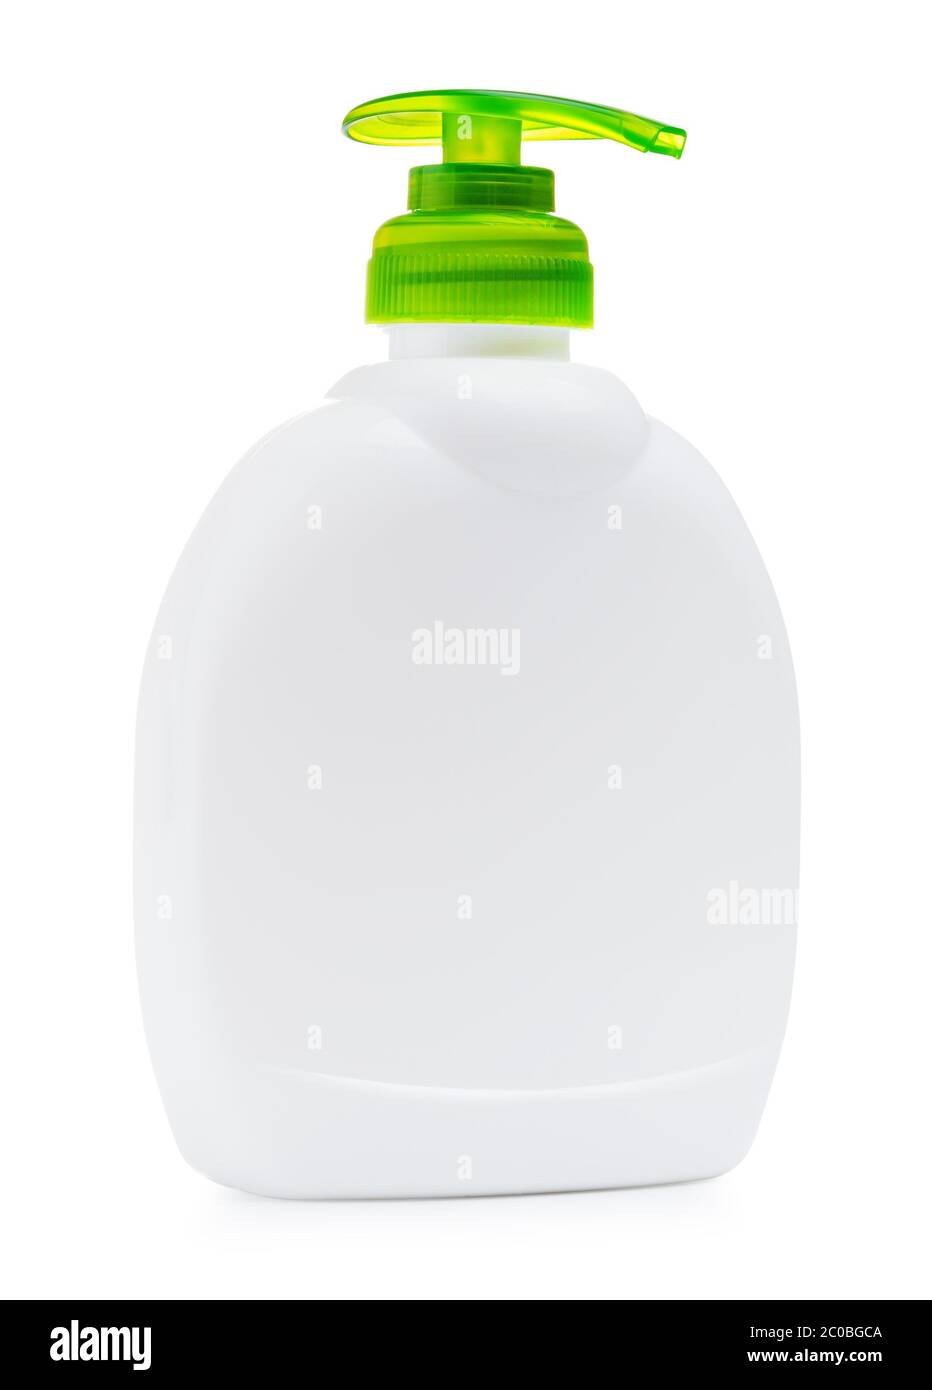 https://c8.alamy.com/comp/2C0BGCA/bottle-of-liquid-soap-2C0BGCA.jpg